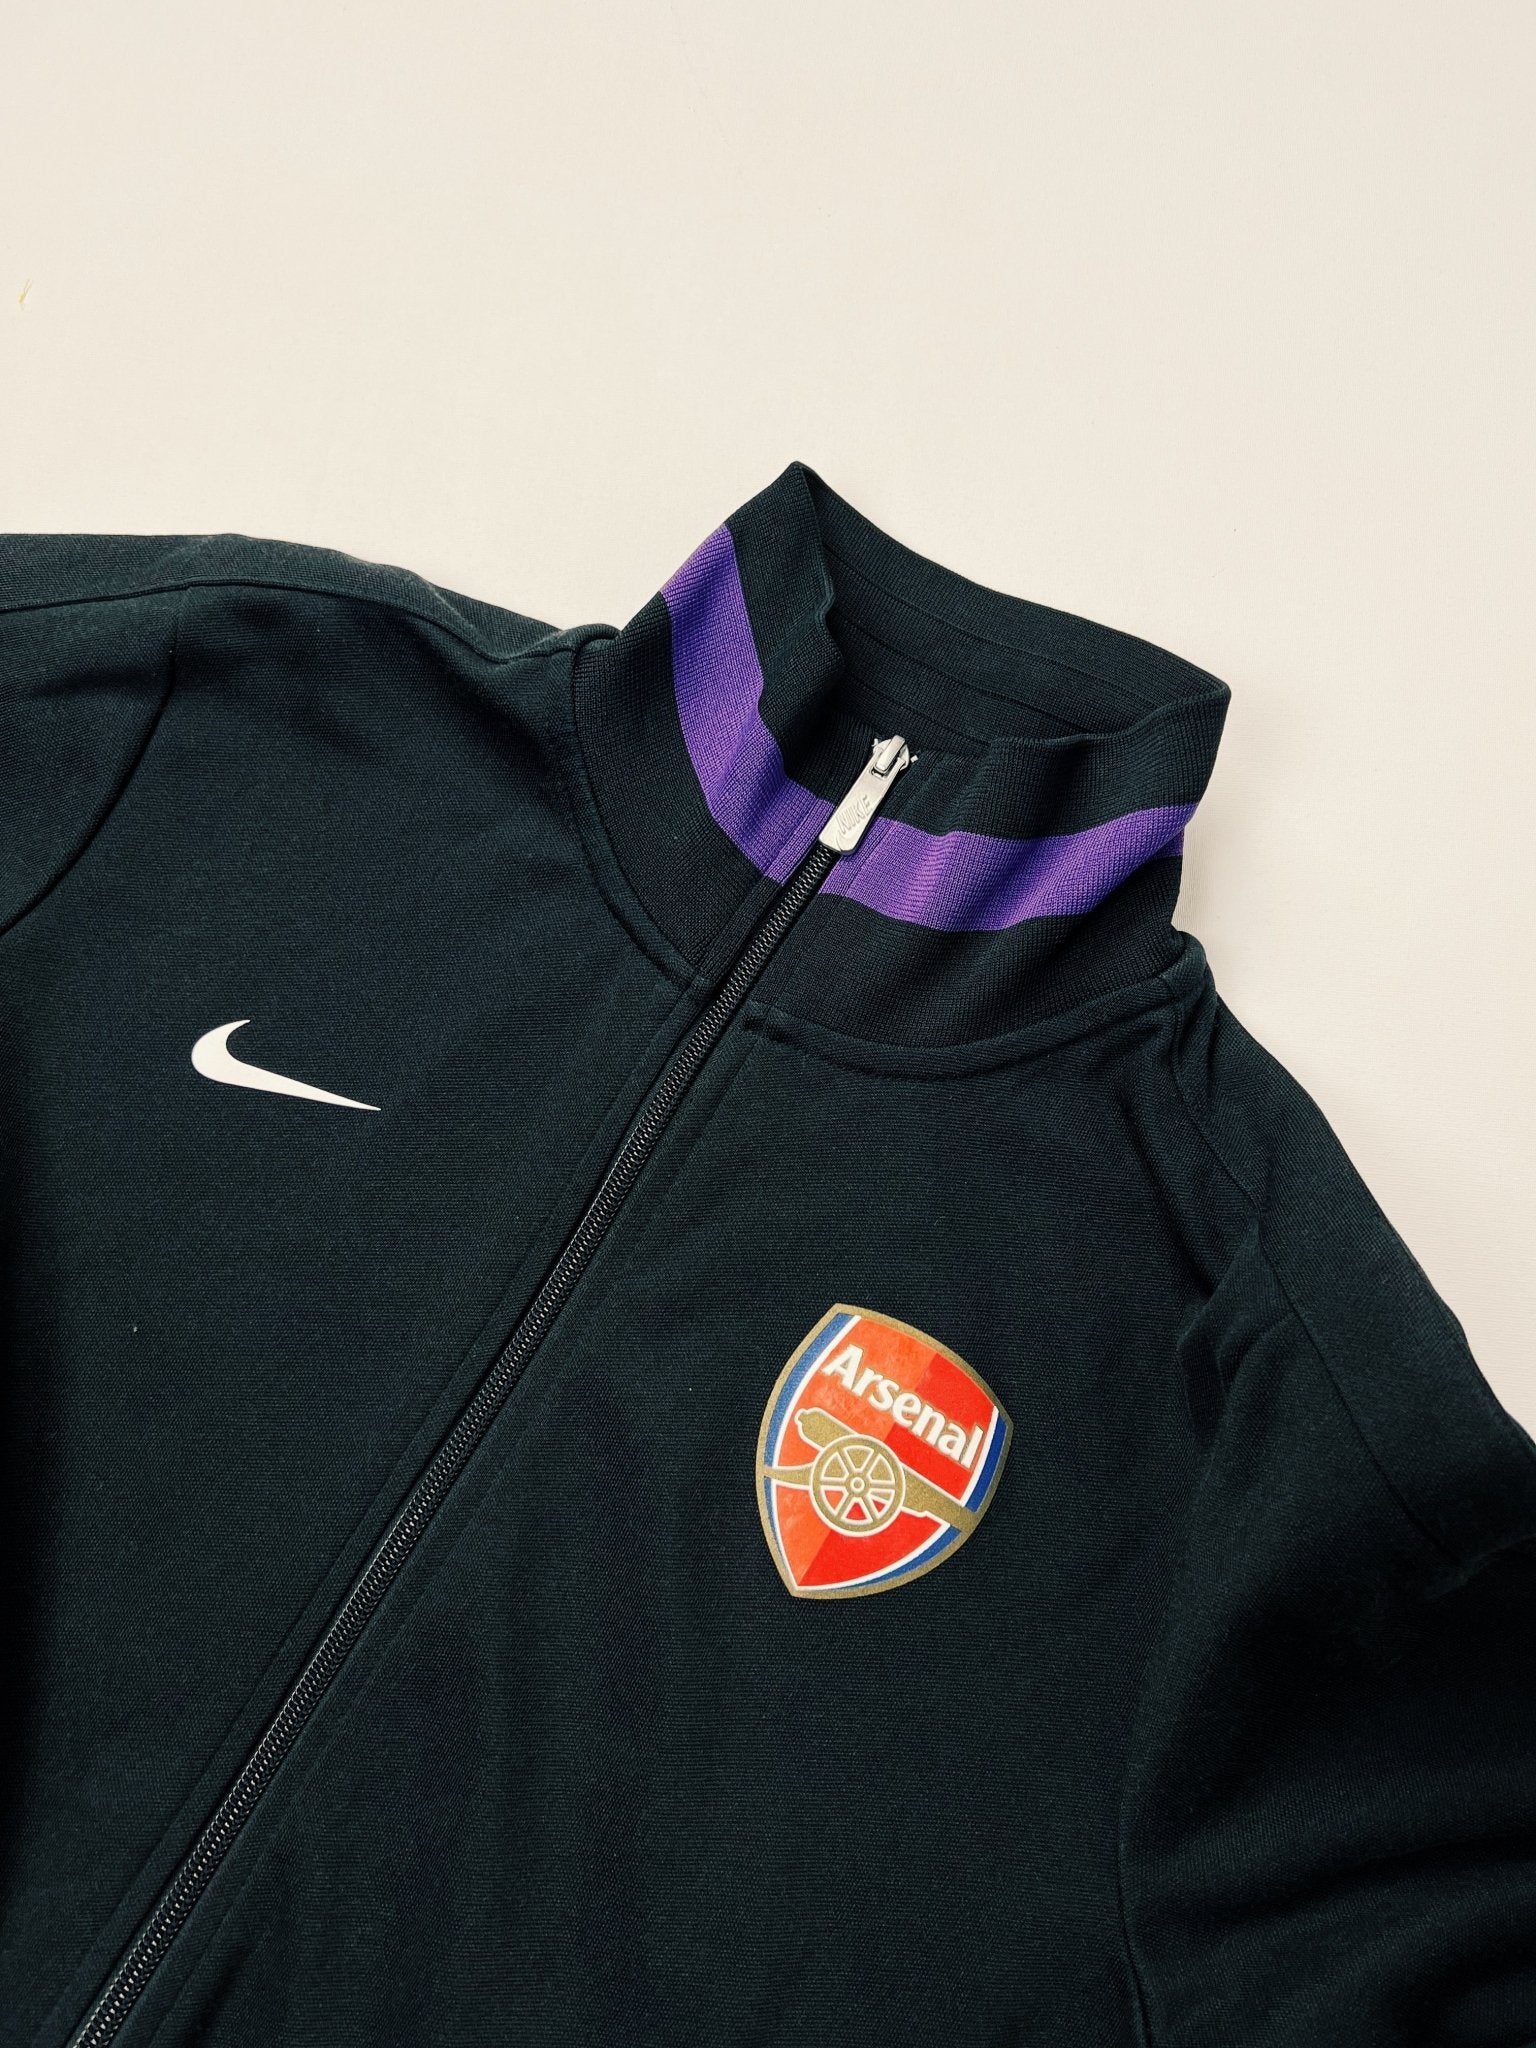 Arsenal 2012-2013 Jacket S-Unwanted FC-stride